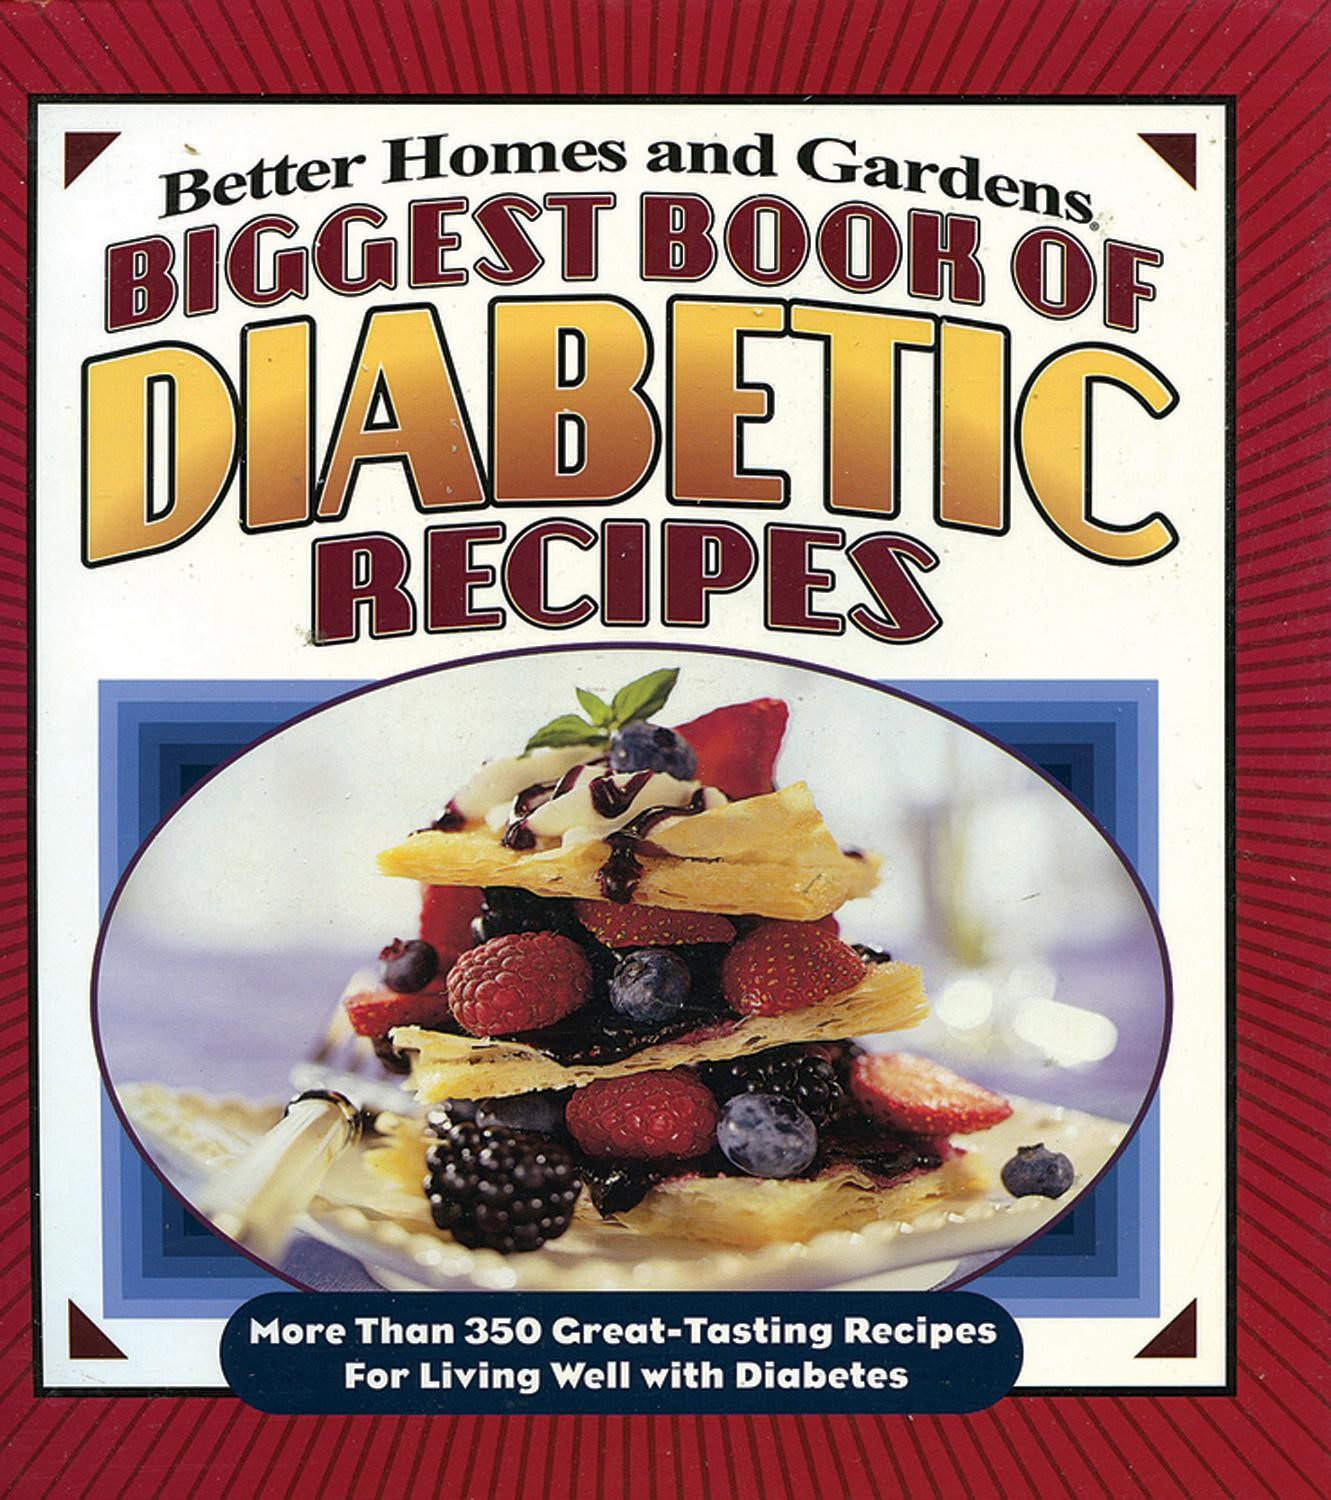 Great Diabetic Recipes
 Biggest Book of Diabetic Recipes More Than 350 Great